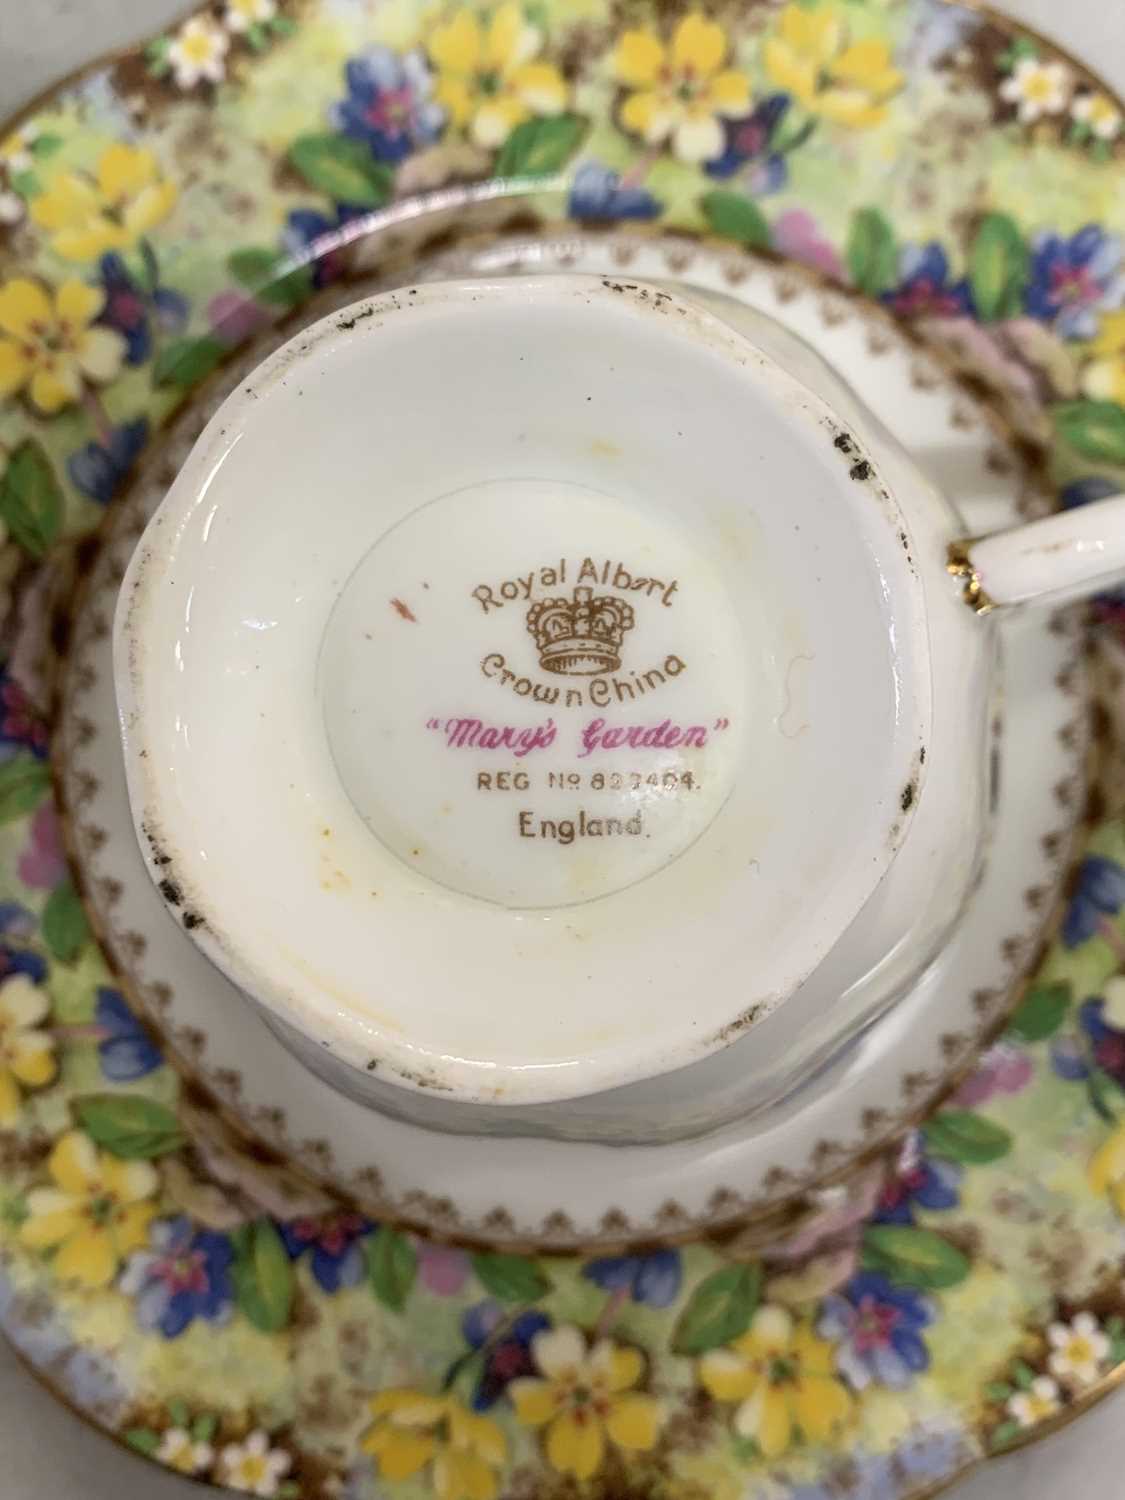 ROYAL ALBERT MARYS GARDEN TEA WARE, Royal Doulton Burgundy dinnerware, Royal Doulton contemporary - Image 2 of 5